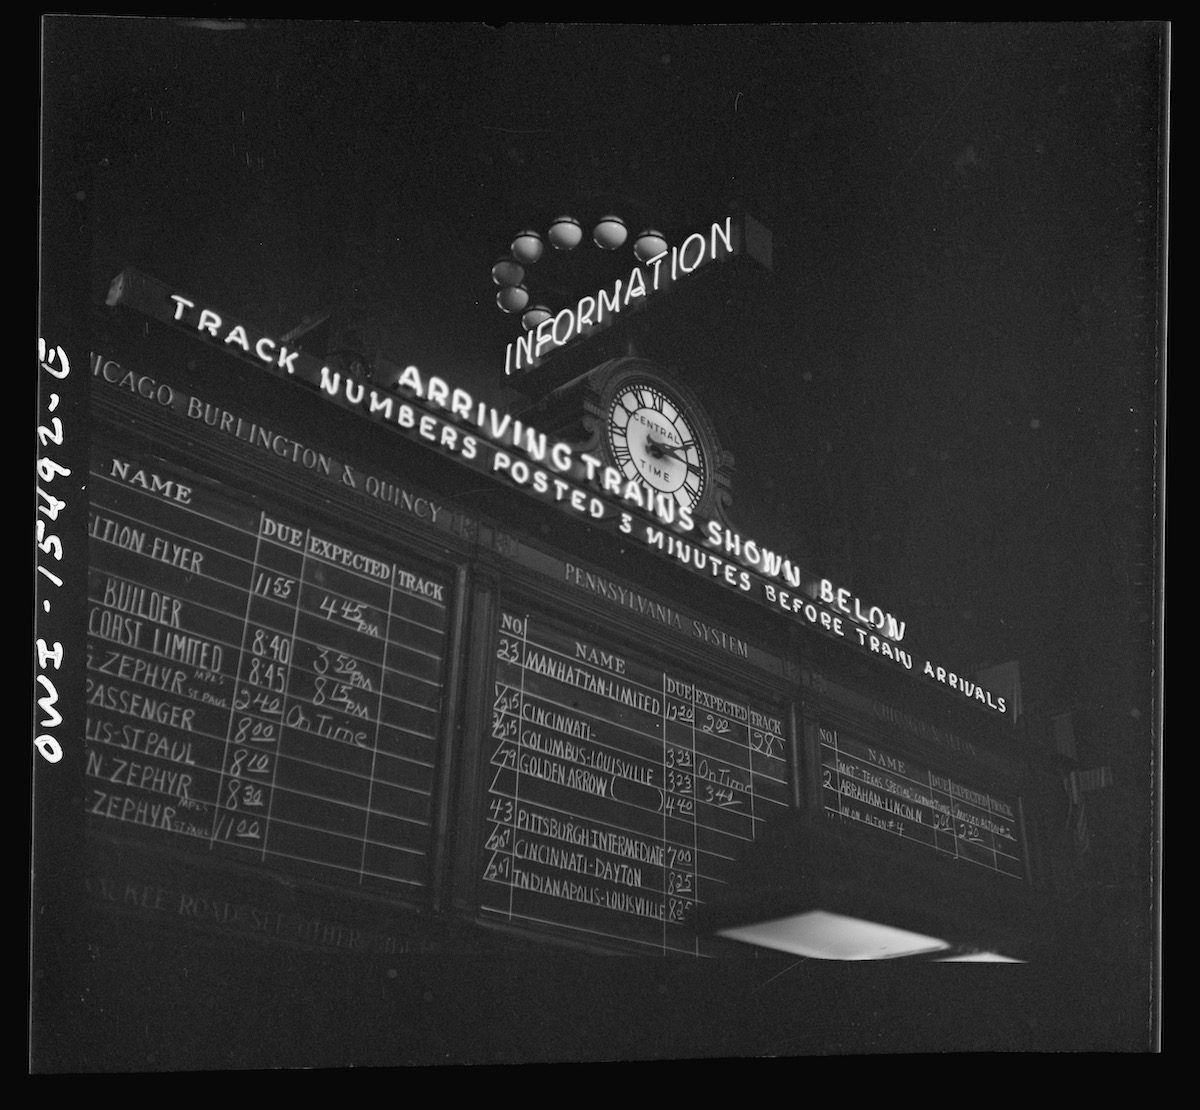 Union Station Chicago 1943 by Jack Delano